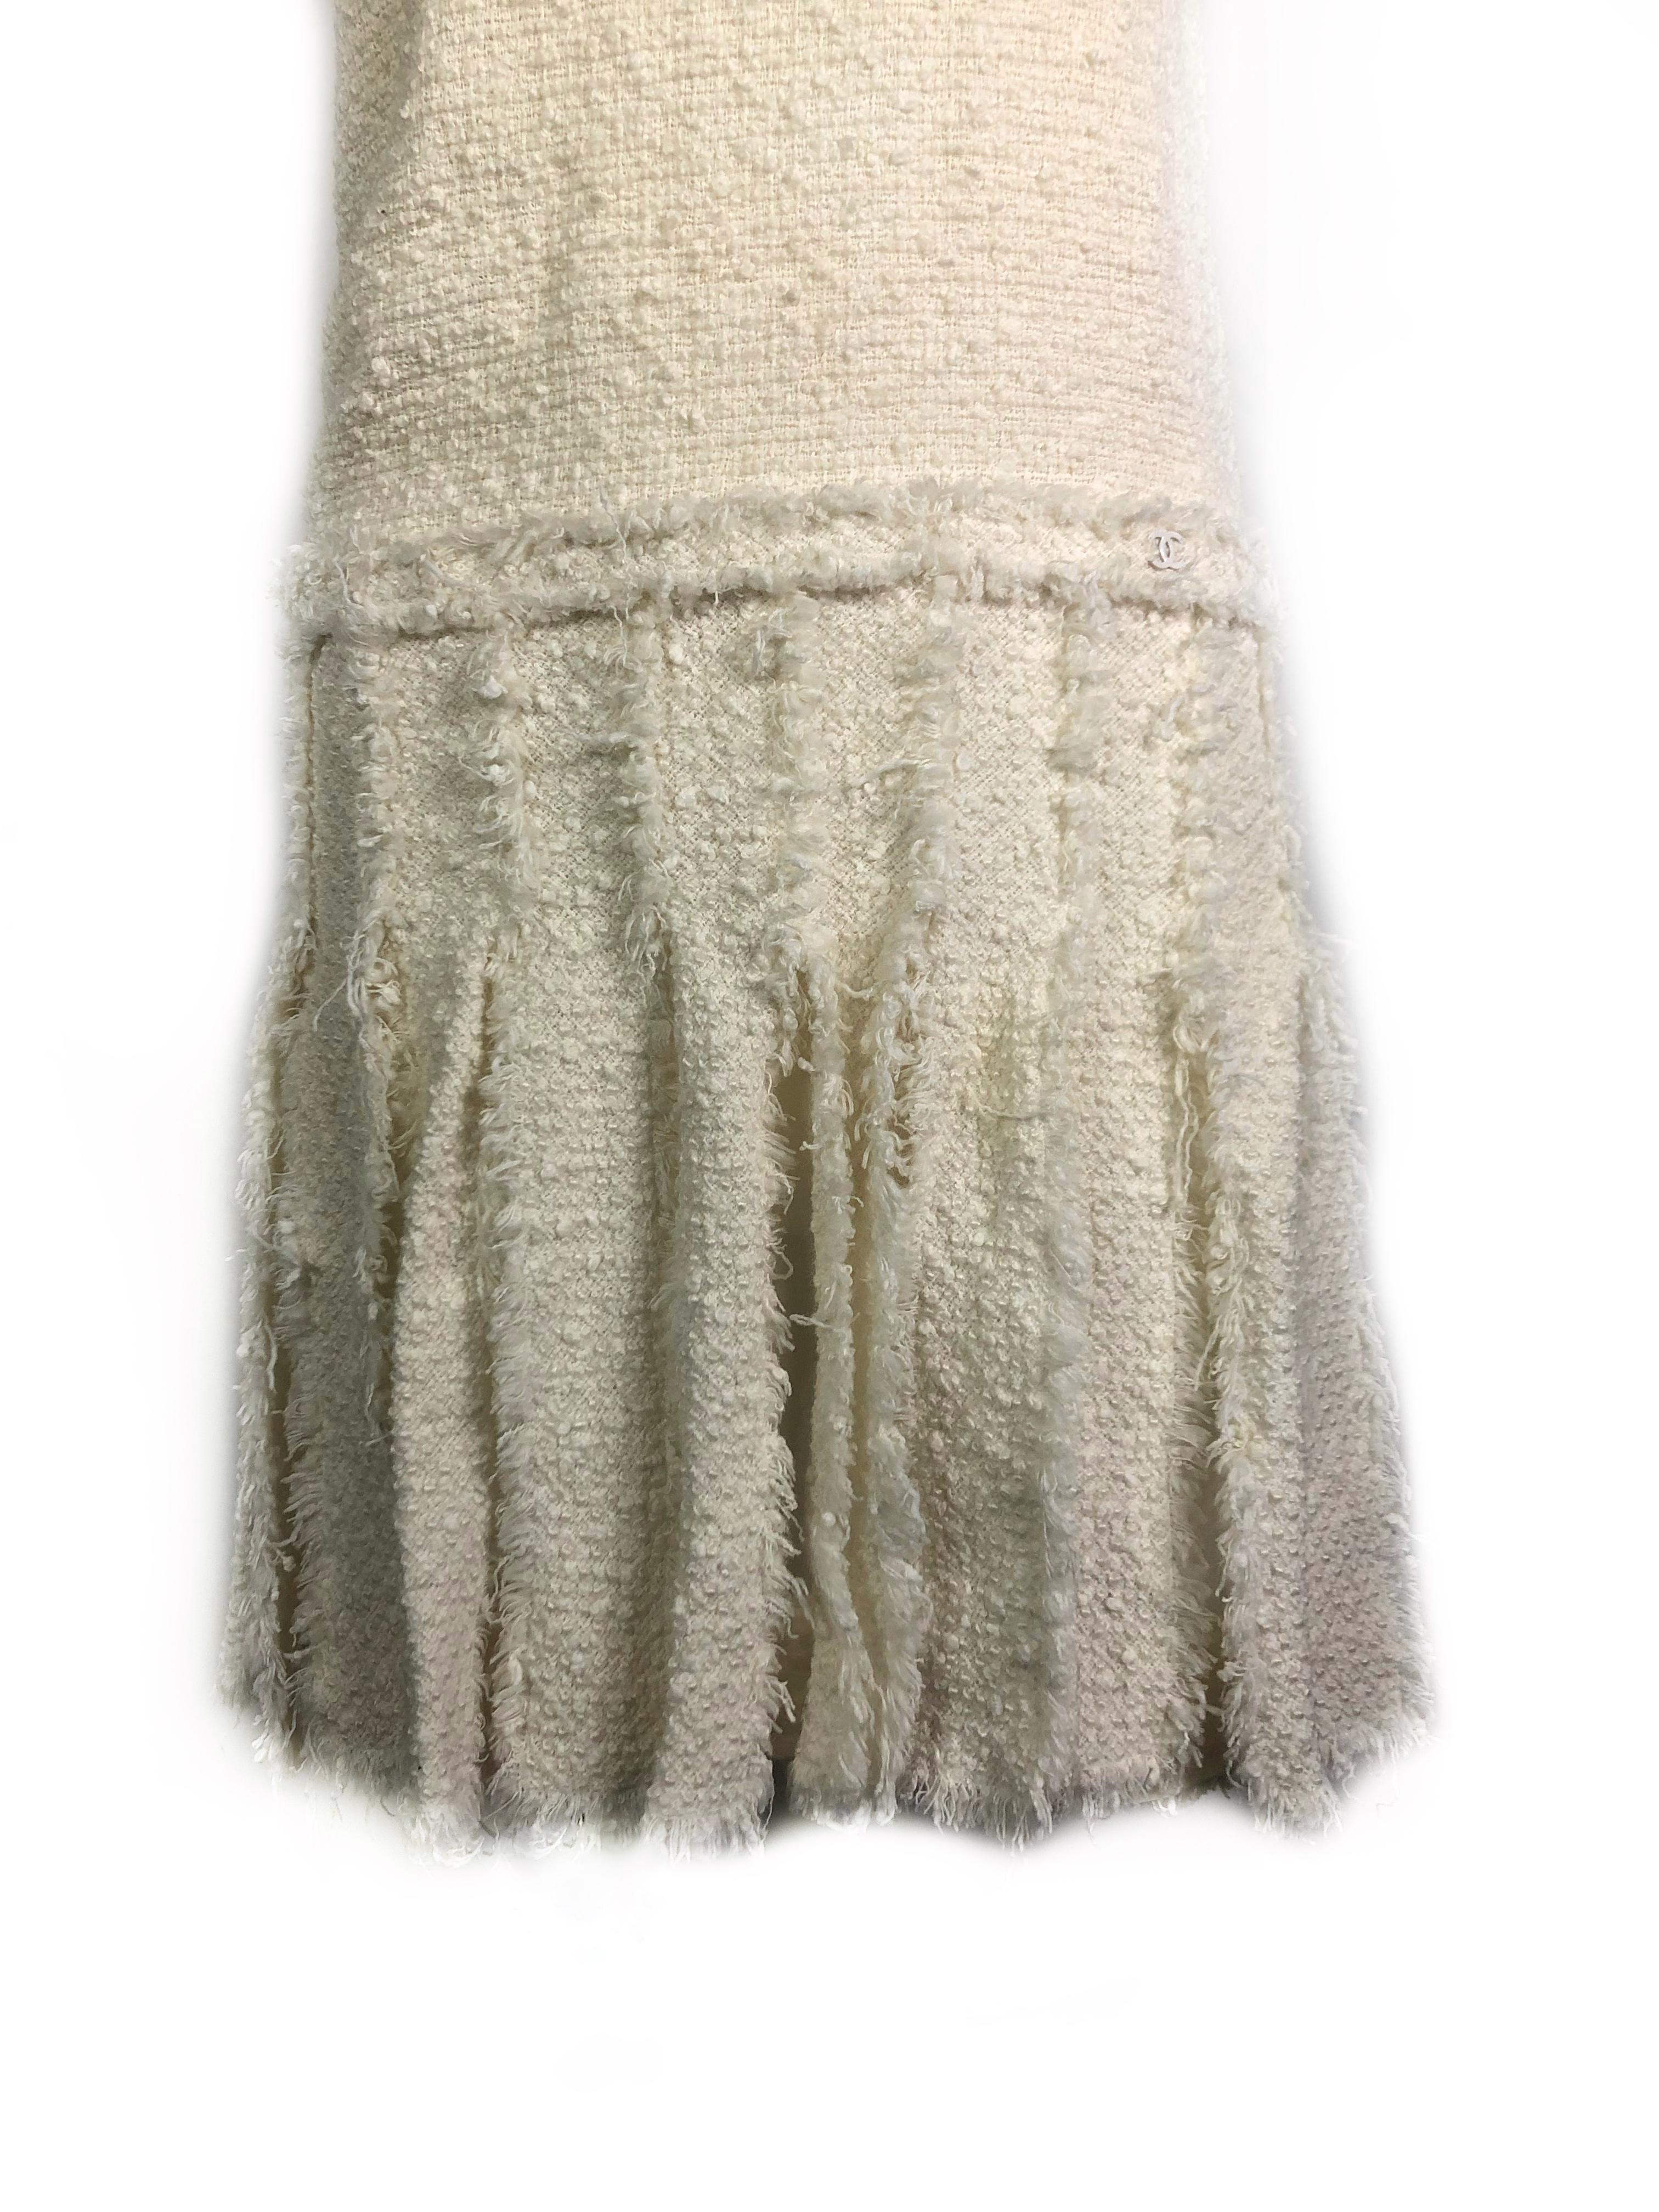 chanel tweed dress white